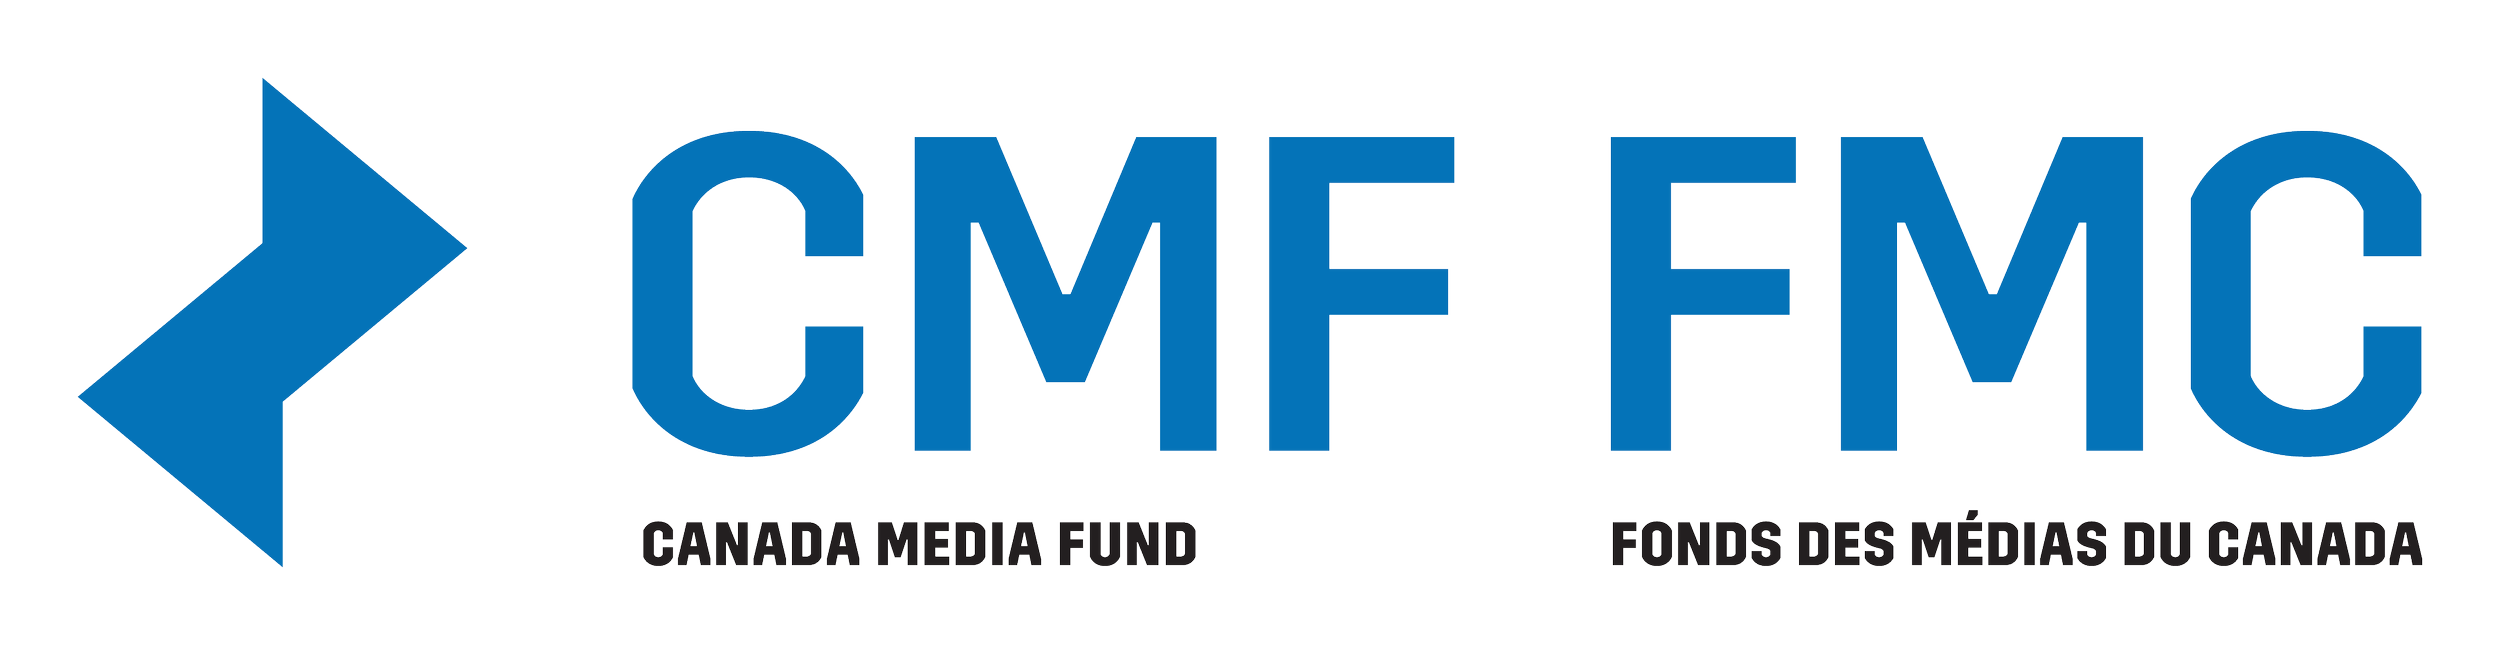 CMF-Logo-Sponsorship-BIL-E-2C-Horiz-Blue P2935+Black-POS-CMYK.png